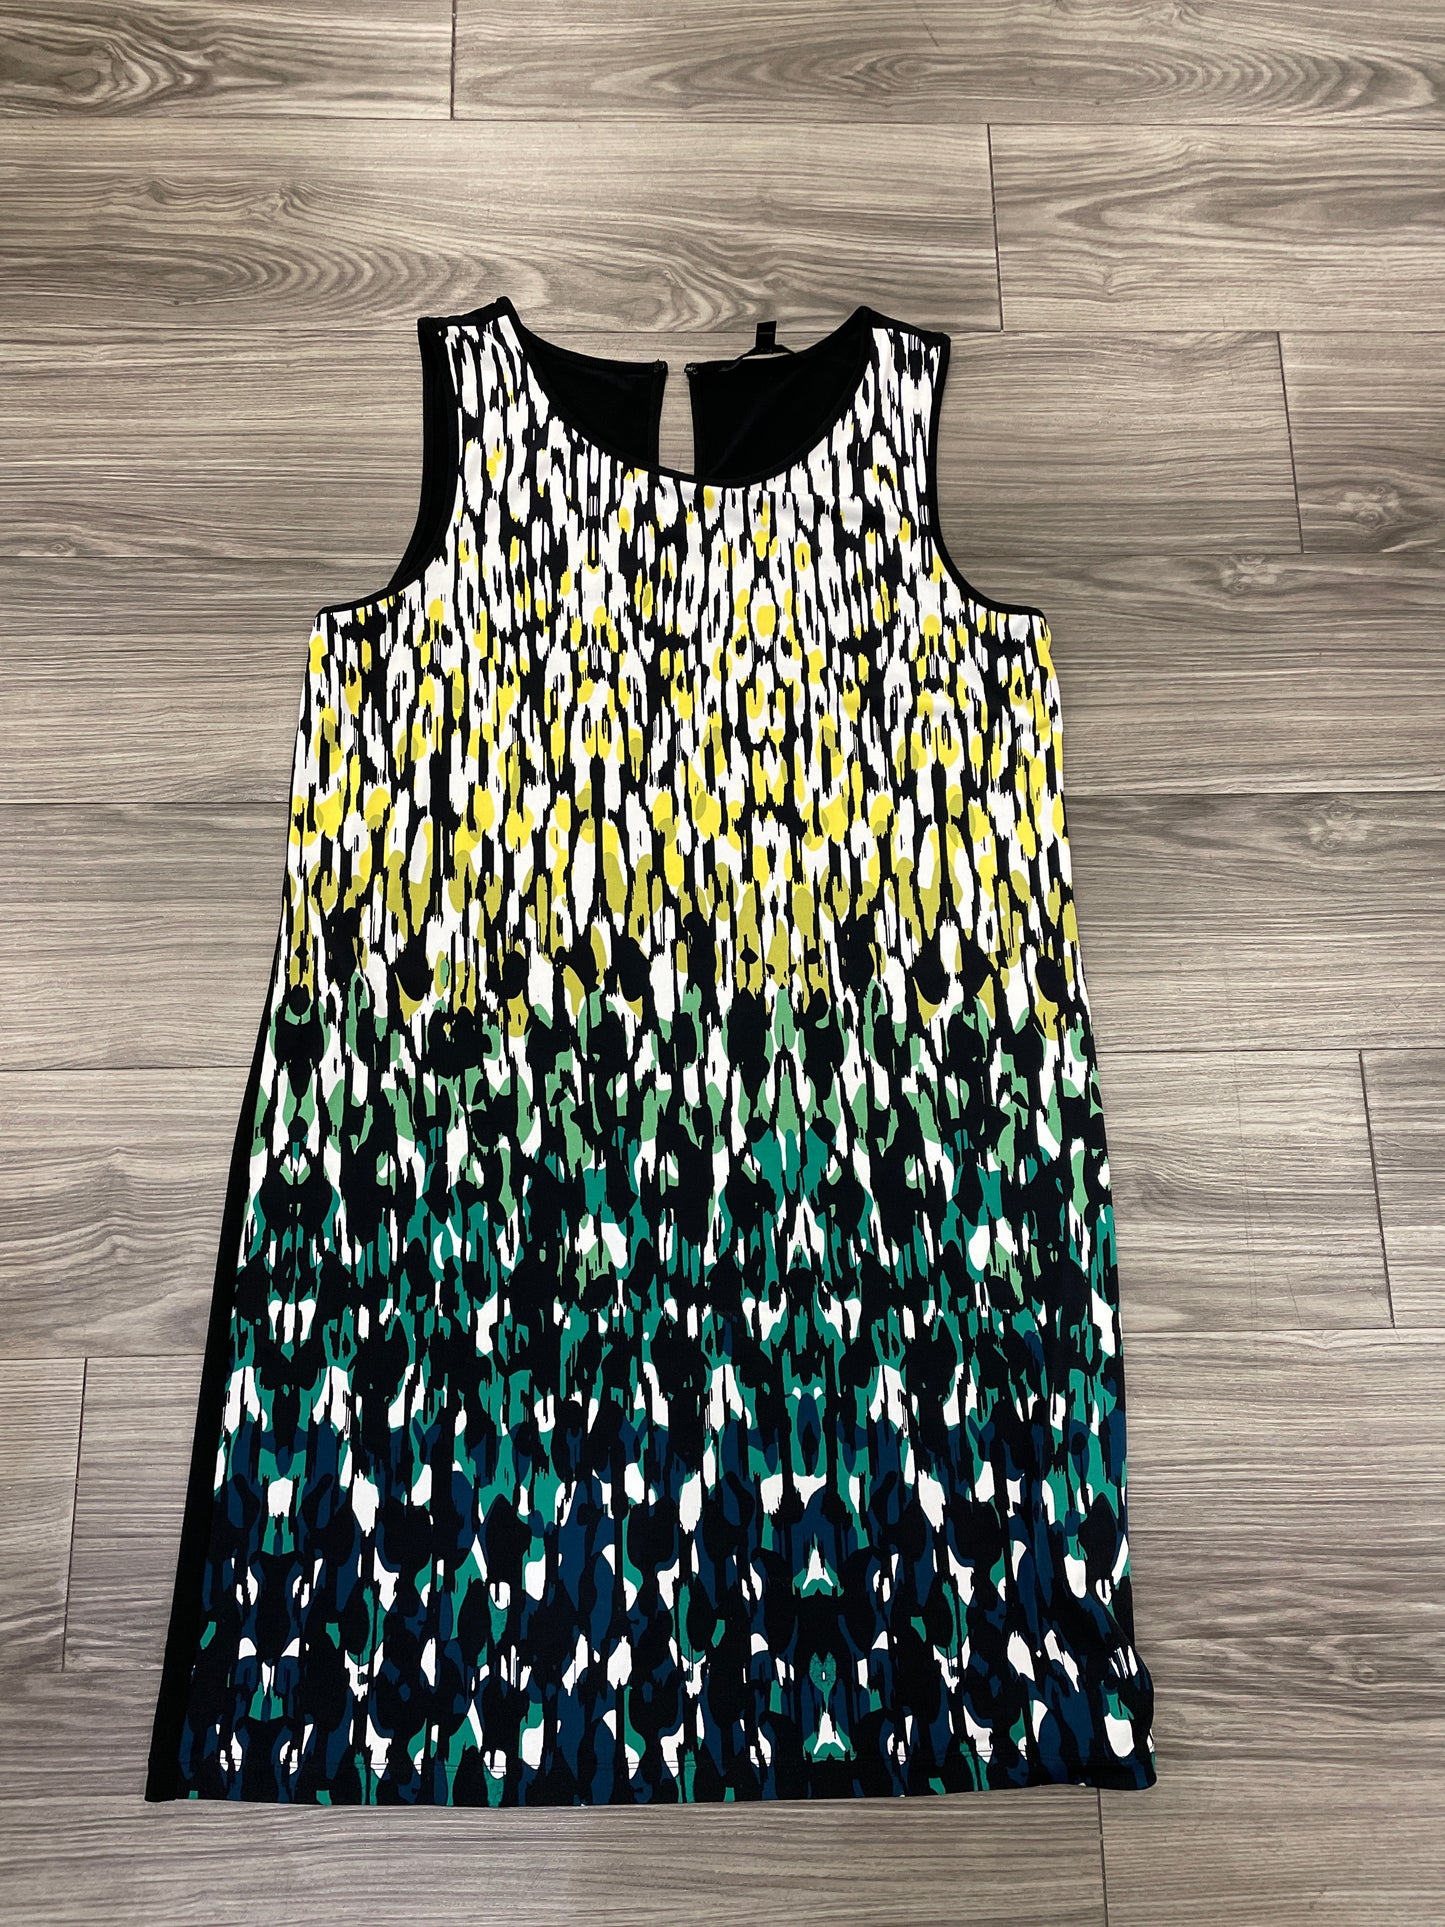 Multi-colored Dress Casual Short Banana Republic, Size Xl